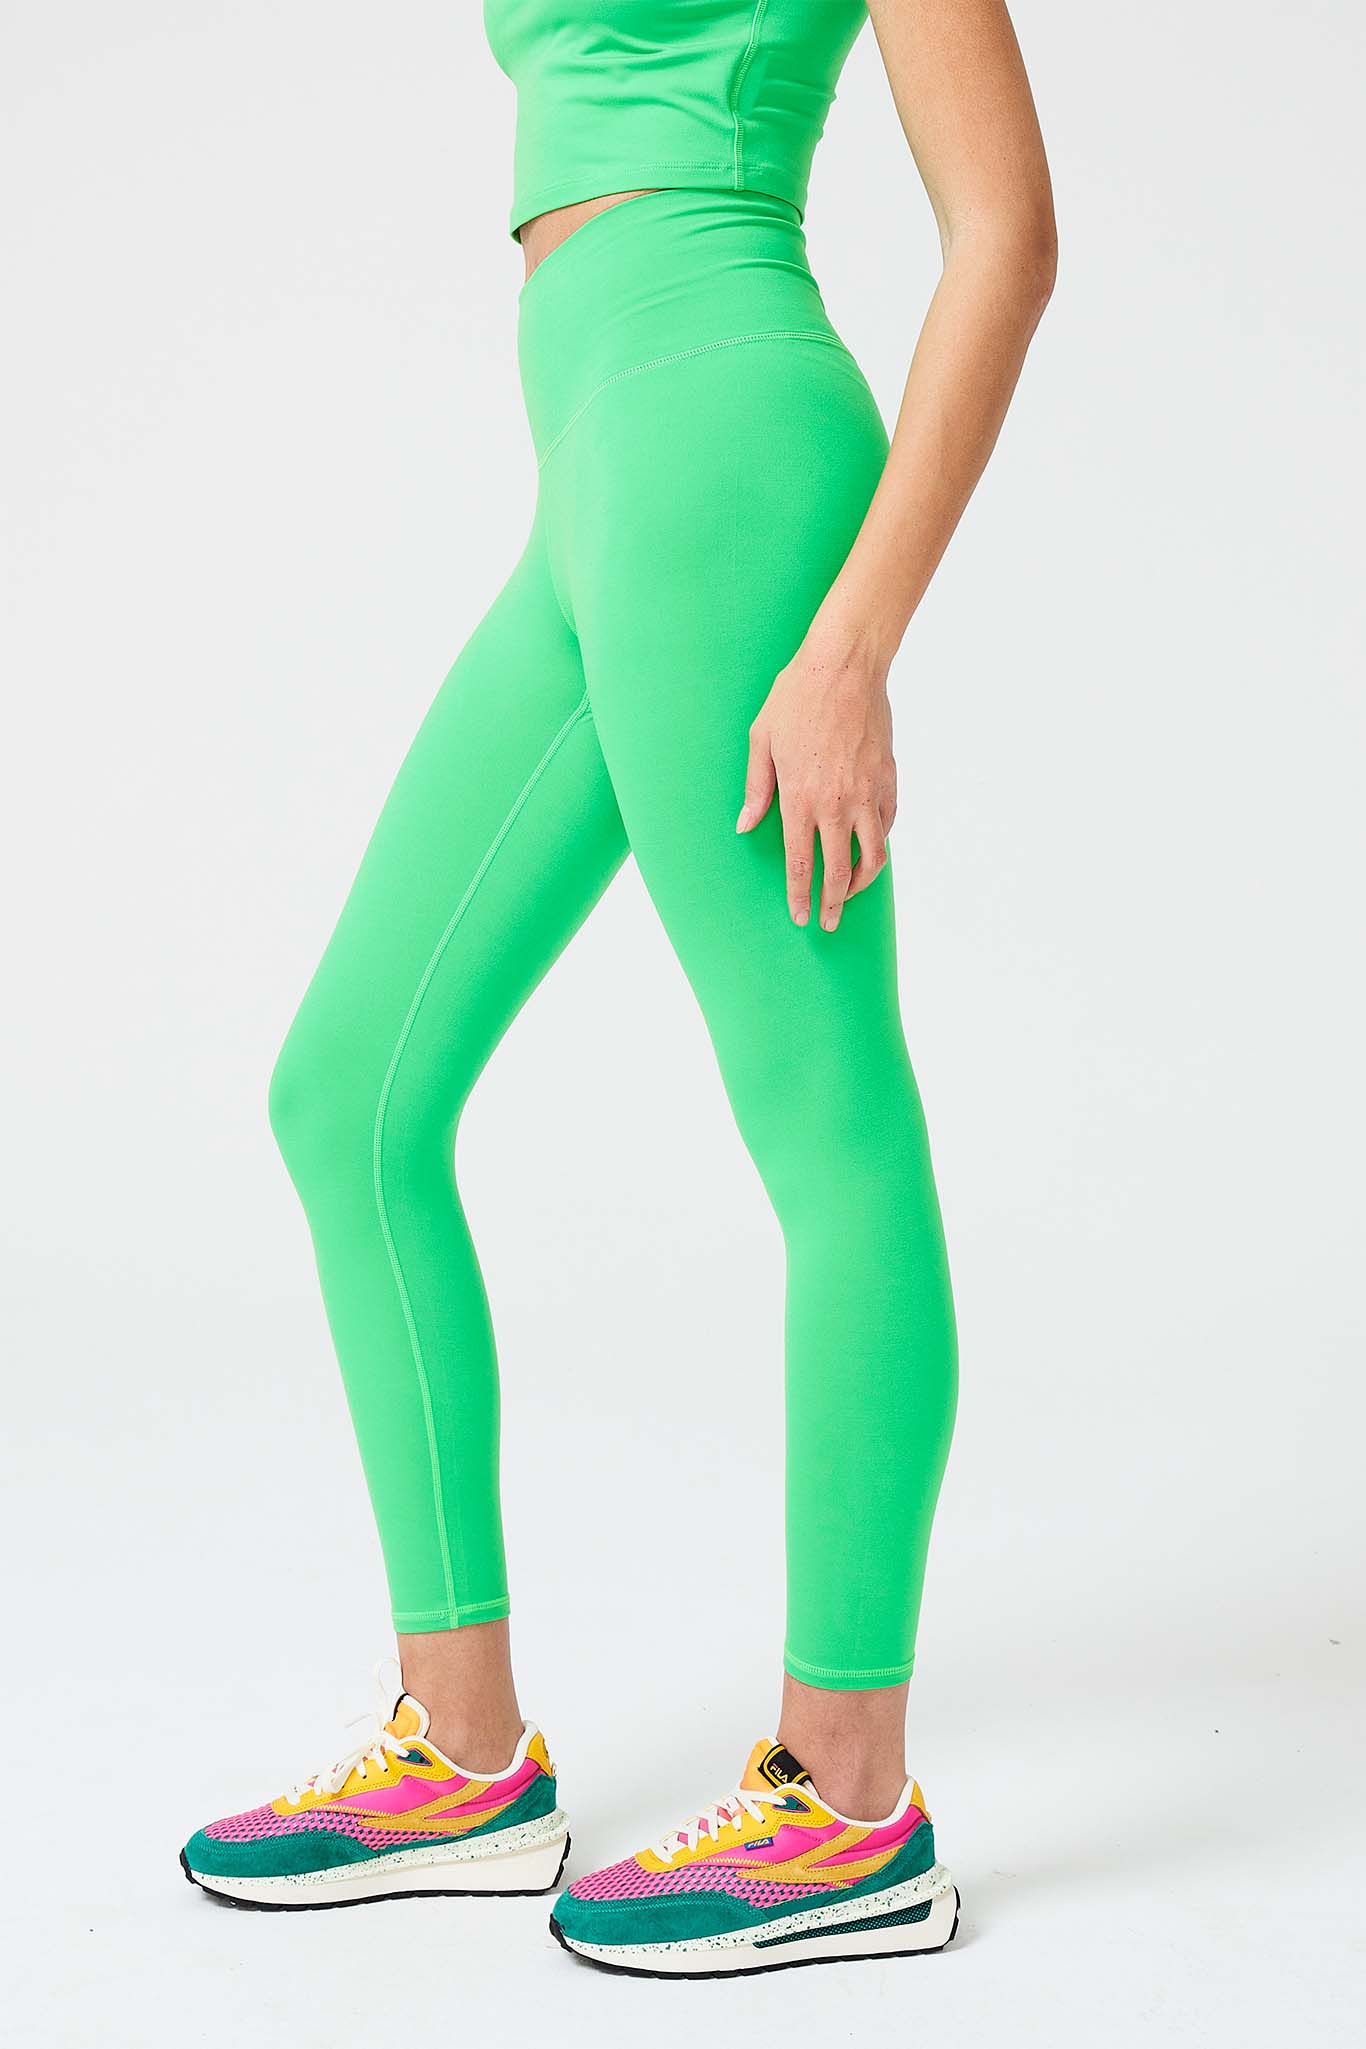 New Womens FILA Multicolor Logo High Waist Leggings XS S M Yoga pants  leggings (Medium)